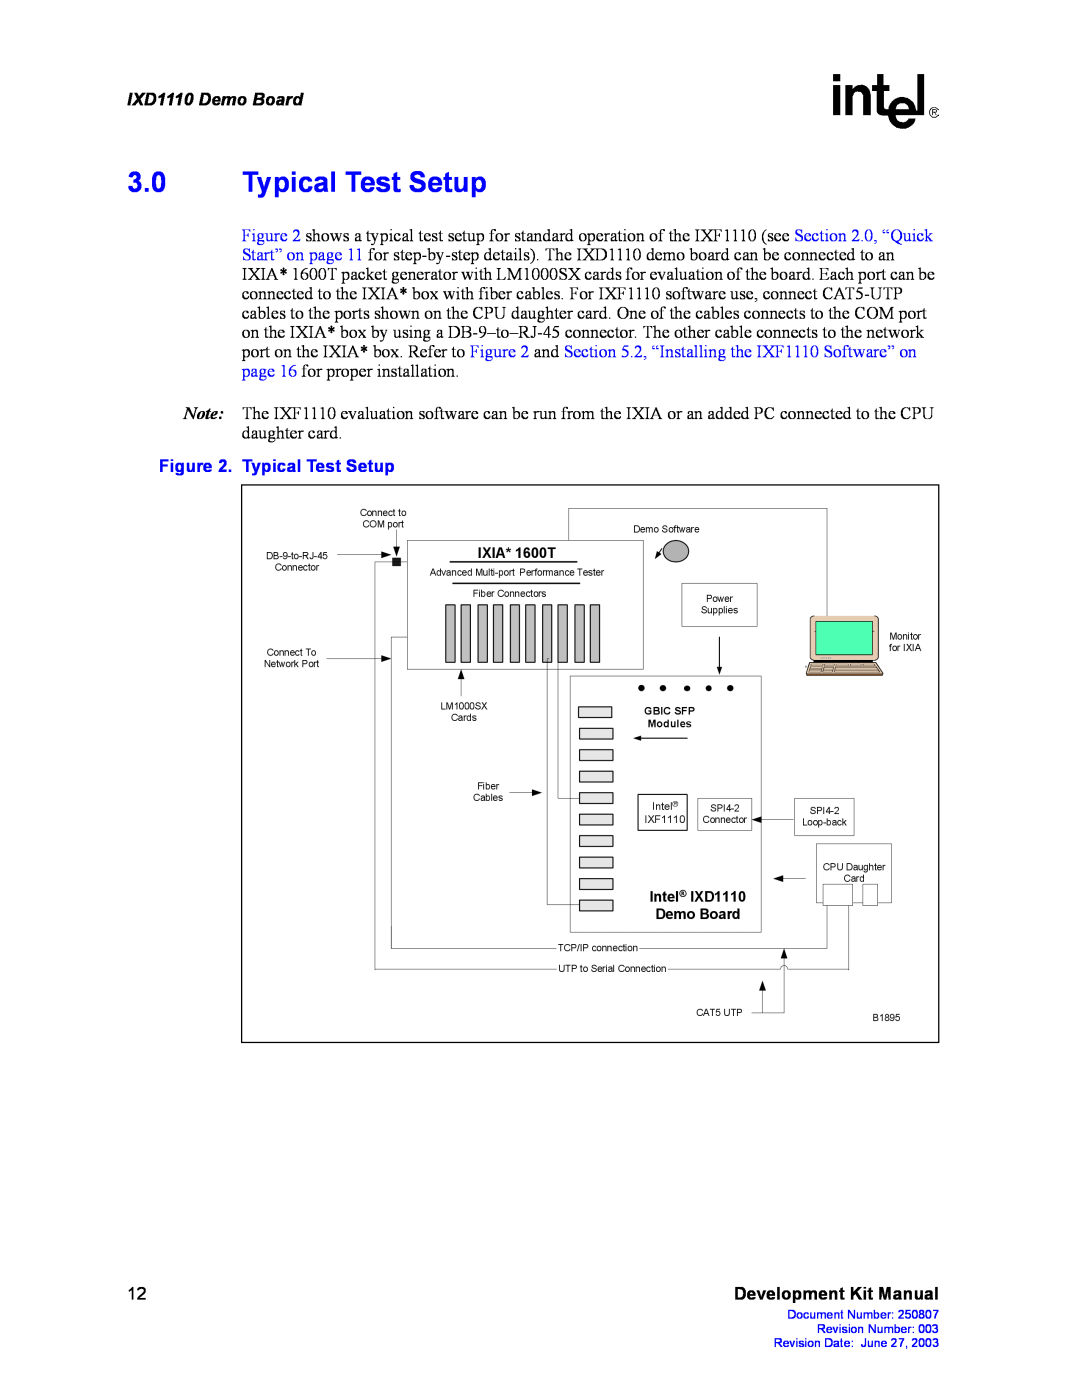 Intel manual Typical Test Setup, IXD1110 Demo Board 